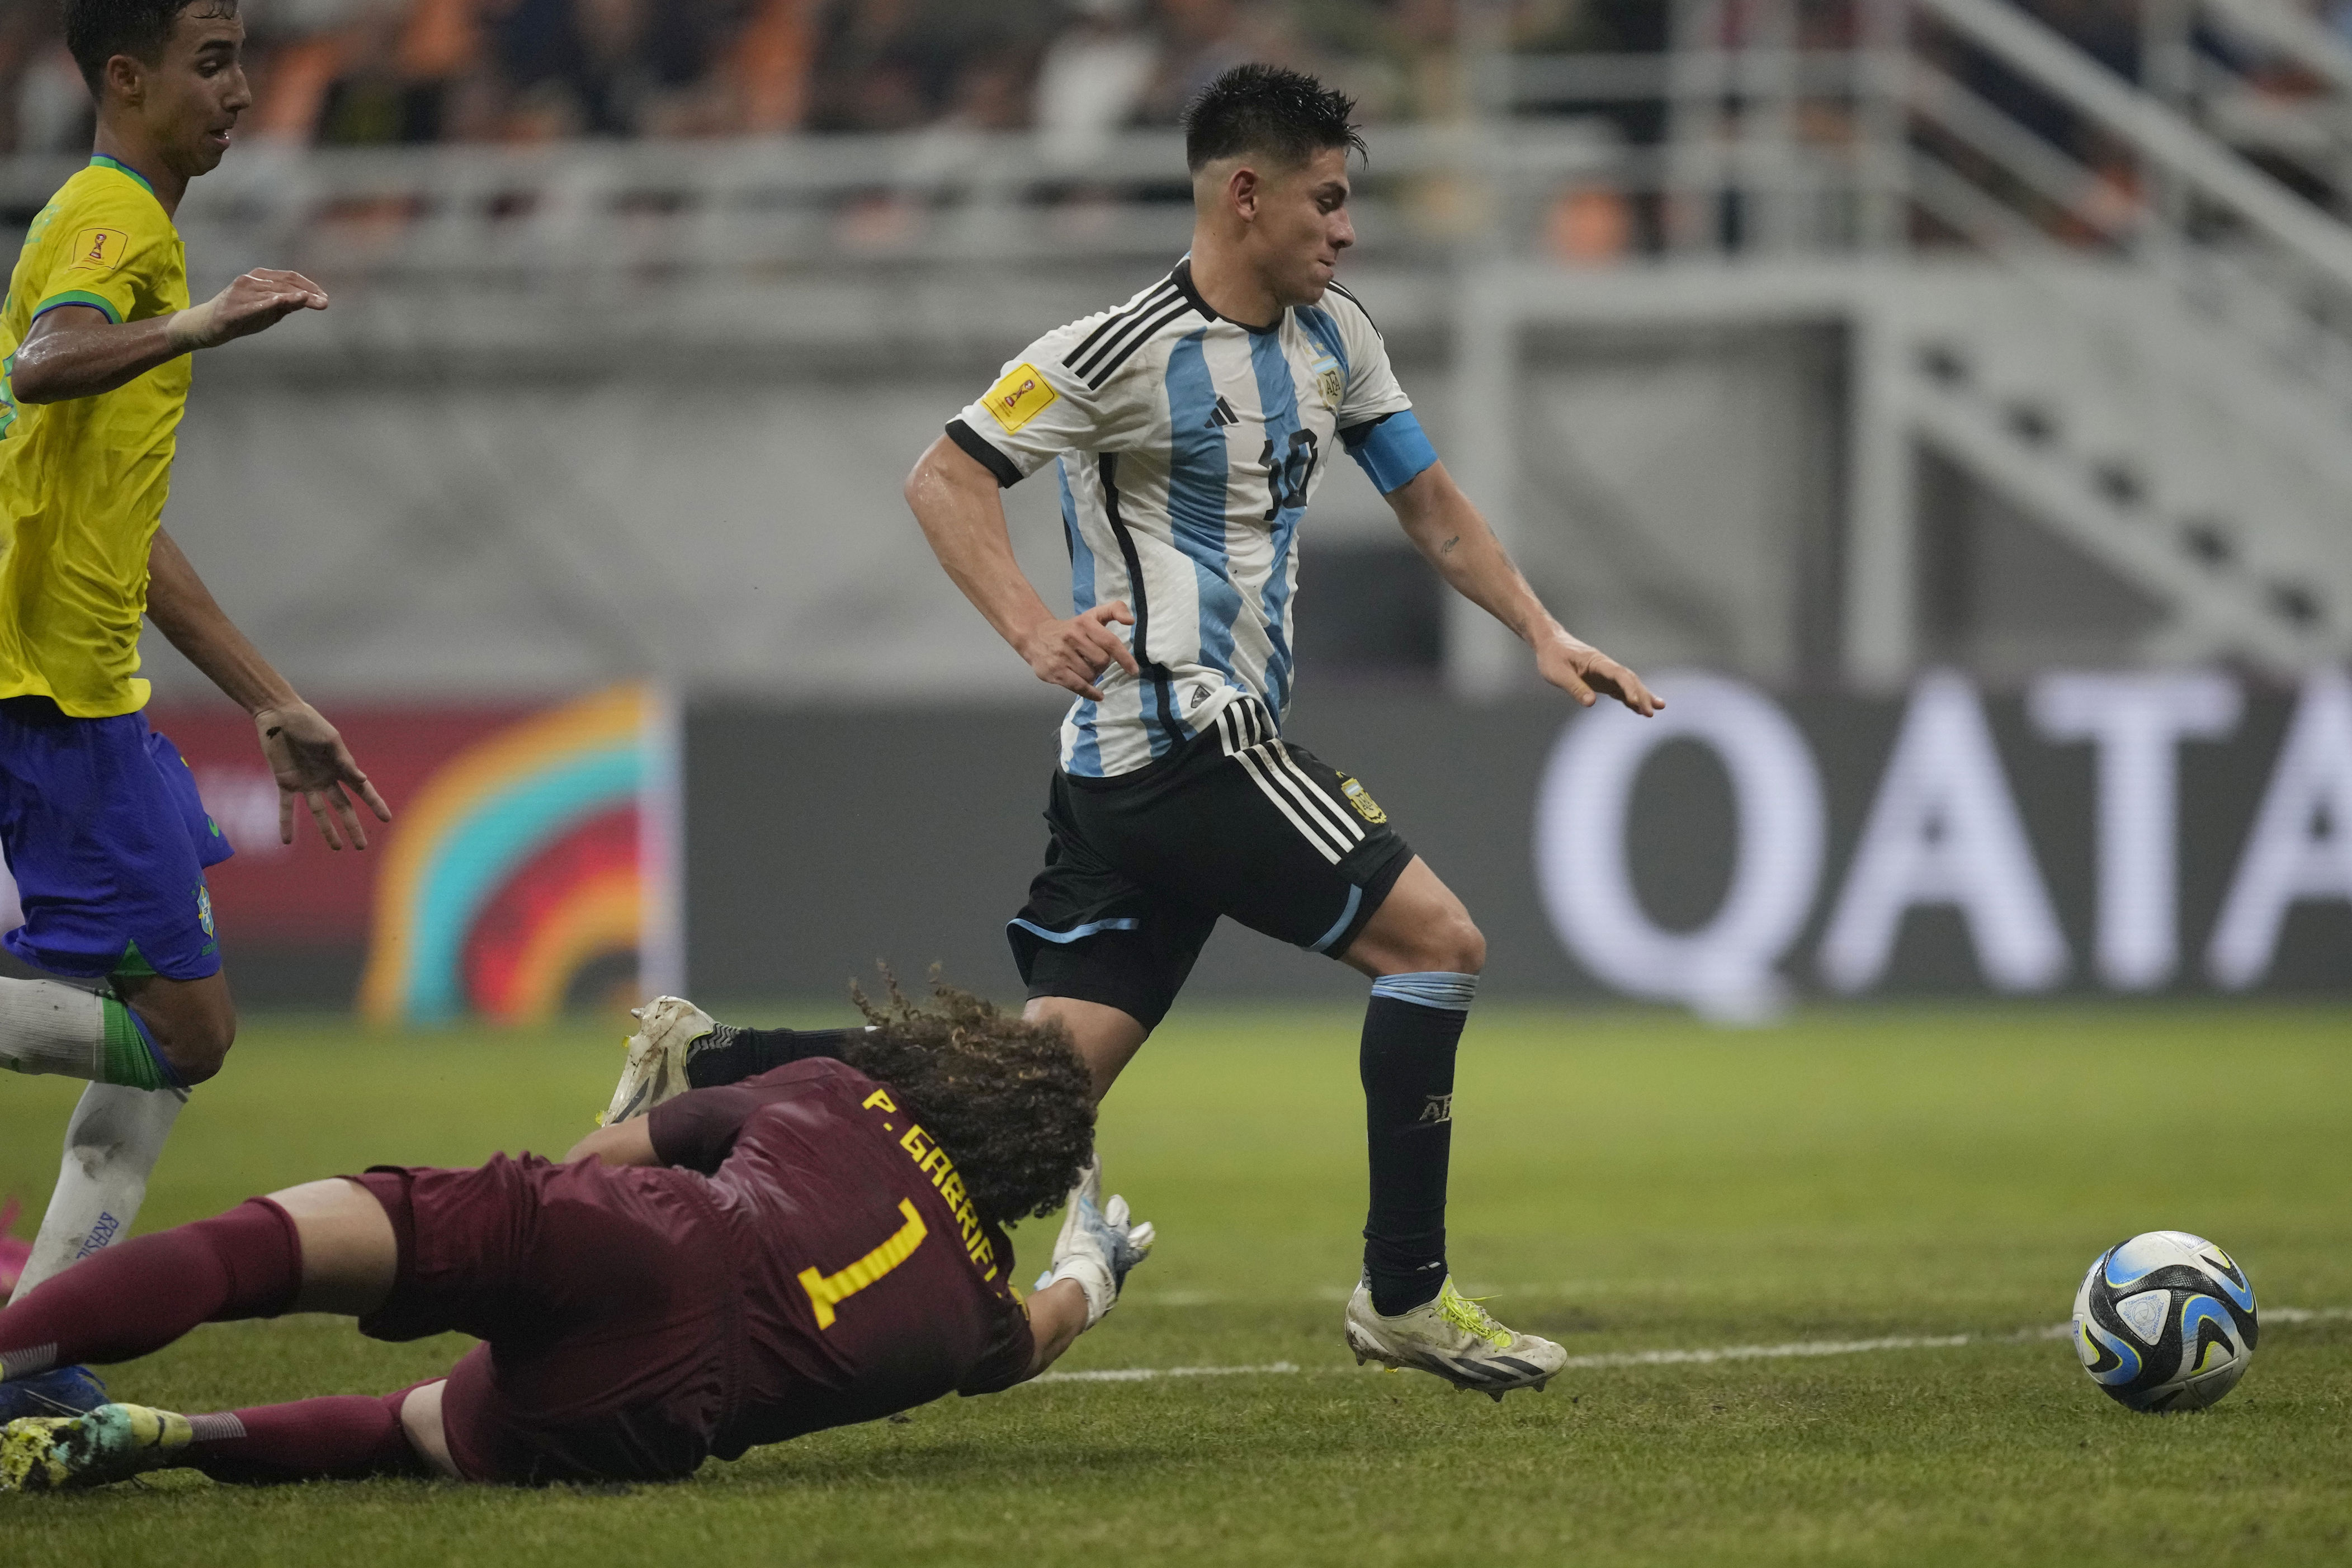 echeverri herjet med brasil da argentina vant 3-0 i vm-kvartfinalen